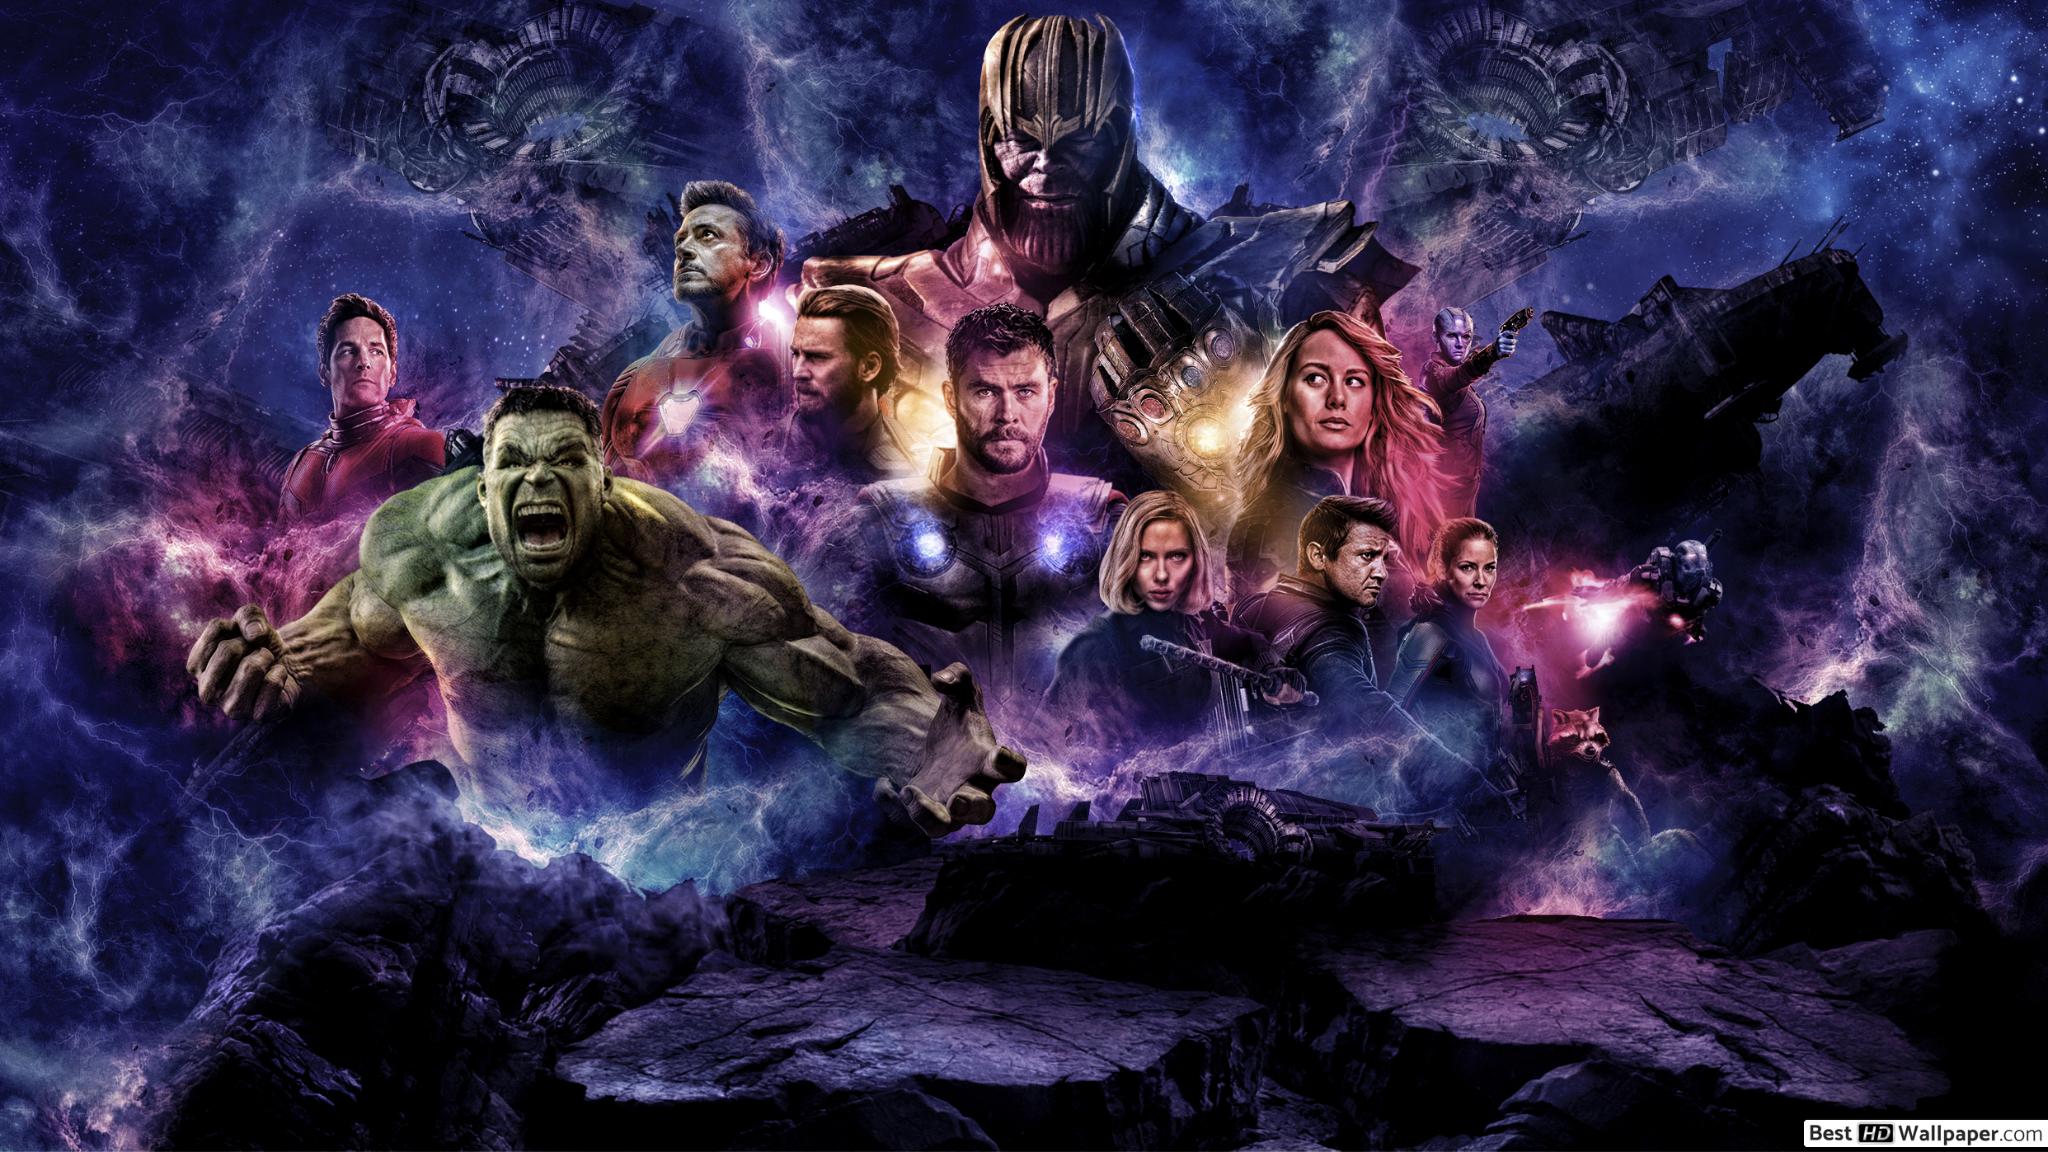 Avengers: Endgame and the villain HD wallpaper download